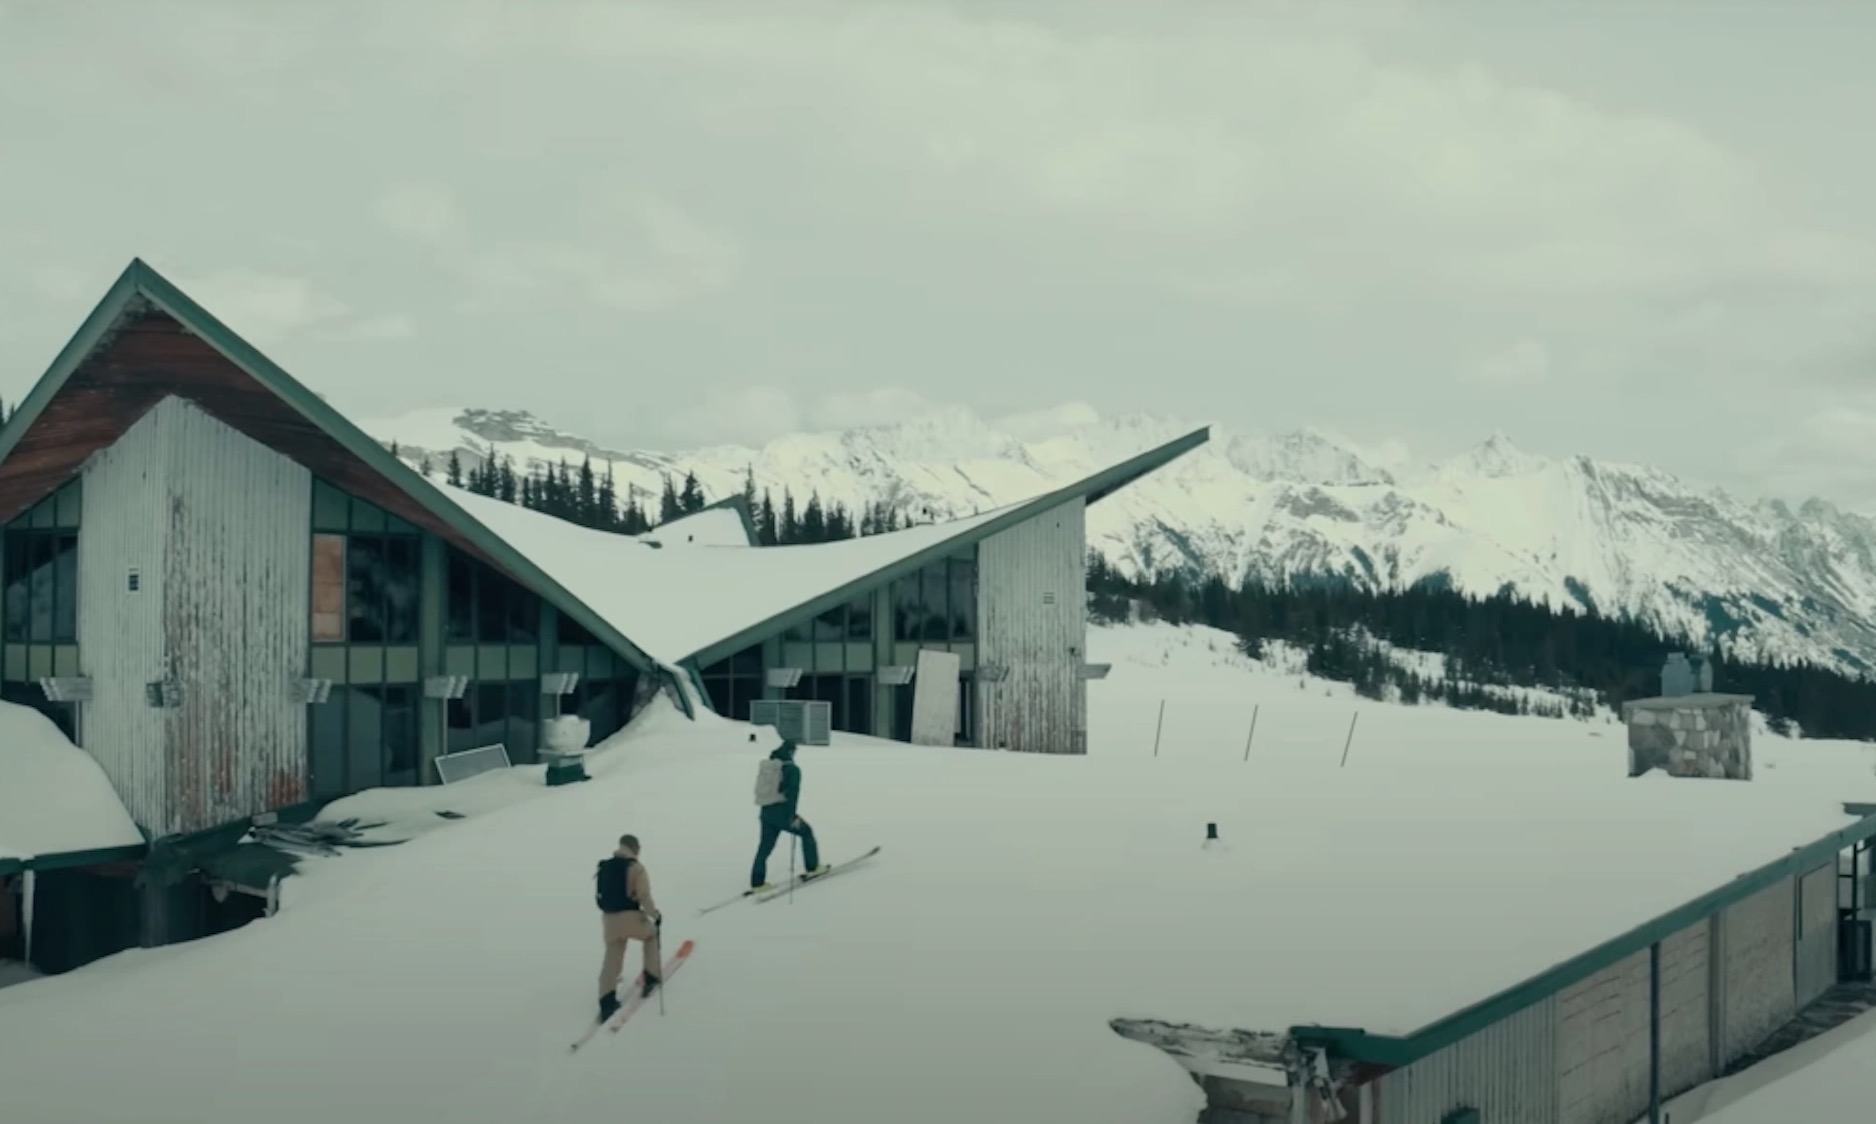 VIDEO: Exploring Derelict Canadian Ski Resort Shuttered Since 2004